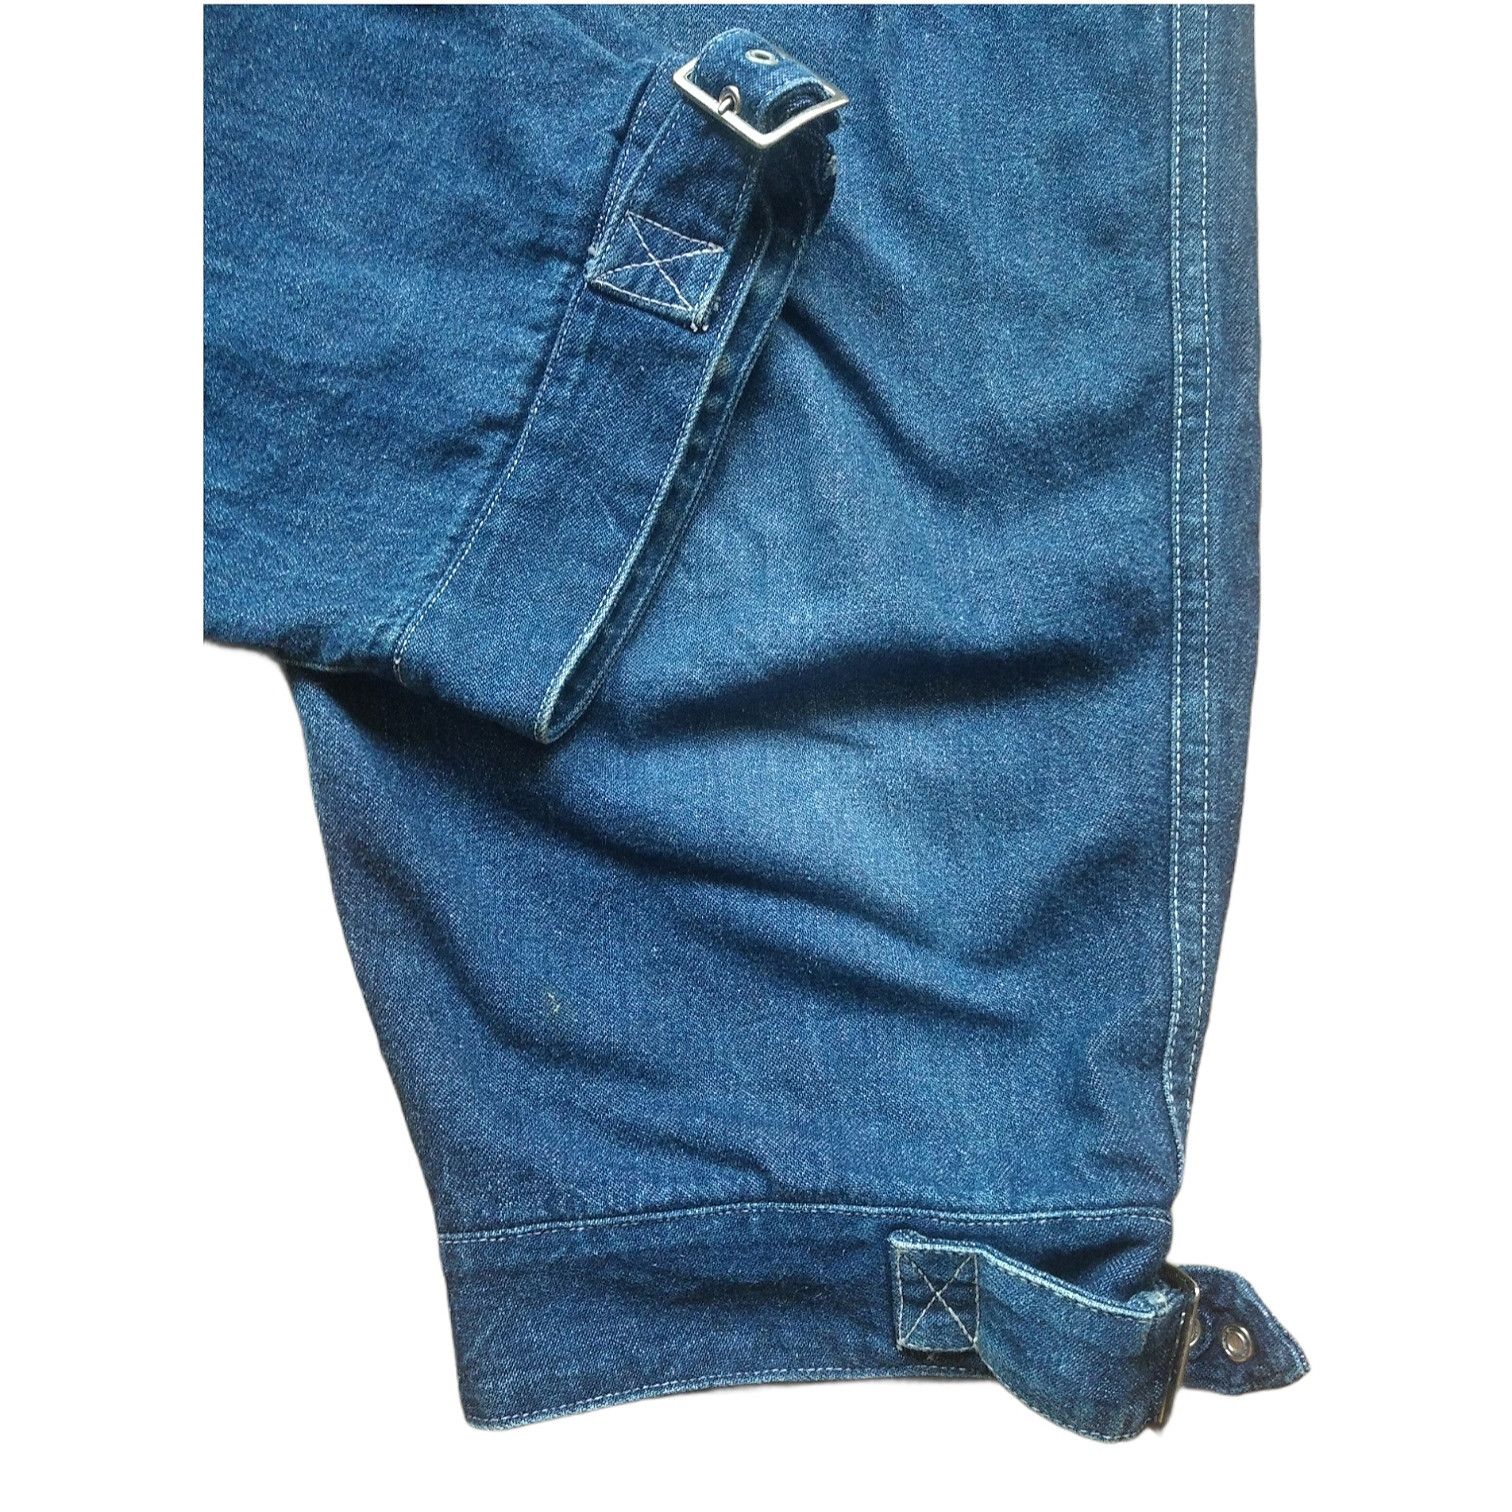 Kansai Yamamoto Vintage Kansai Yamamoto 3/4 Length Denim Pants Size US 26 / EU 42 - 5 Thumbnail